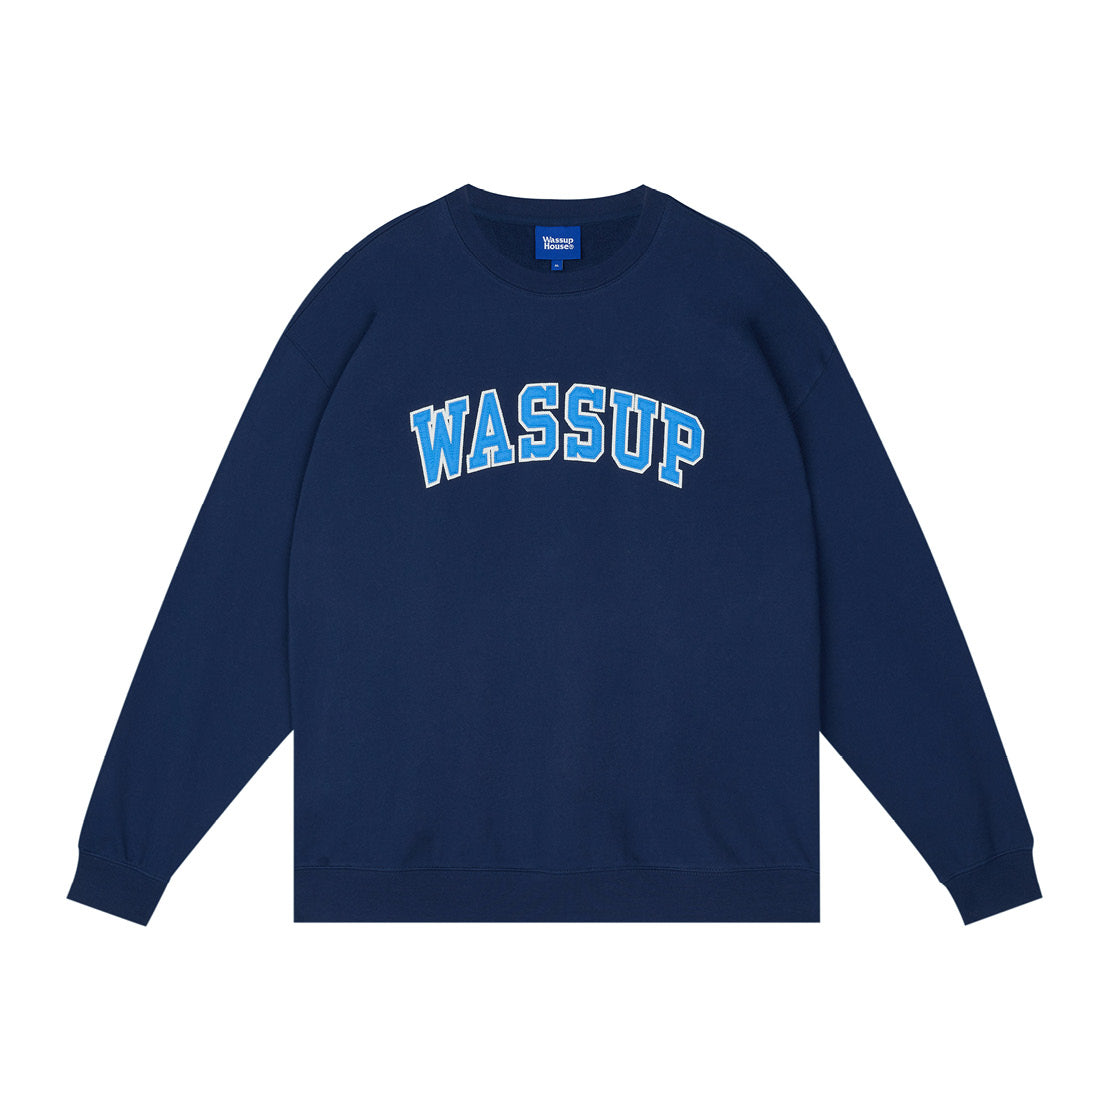 Wassup House Patch Embroidery Logo Sweatshirt